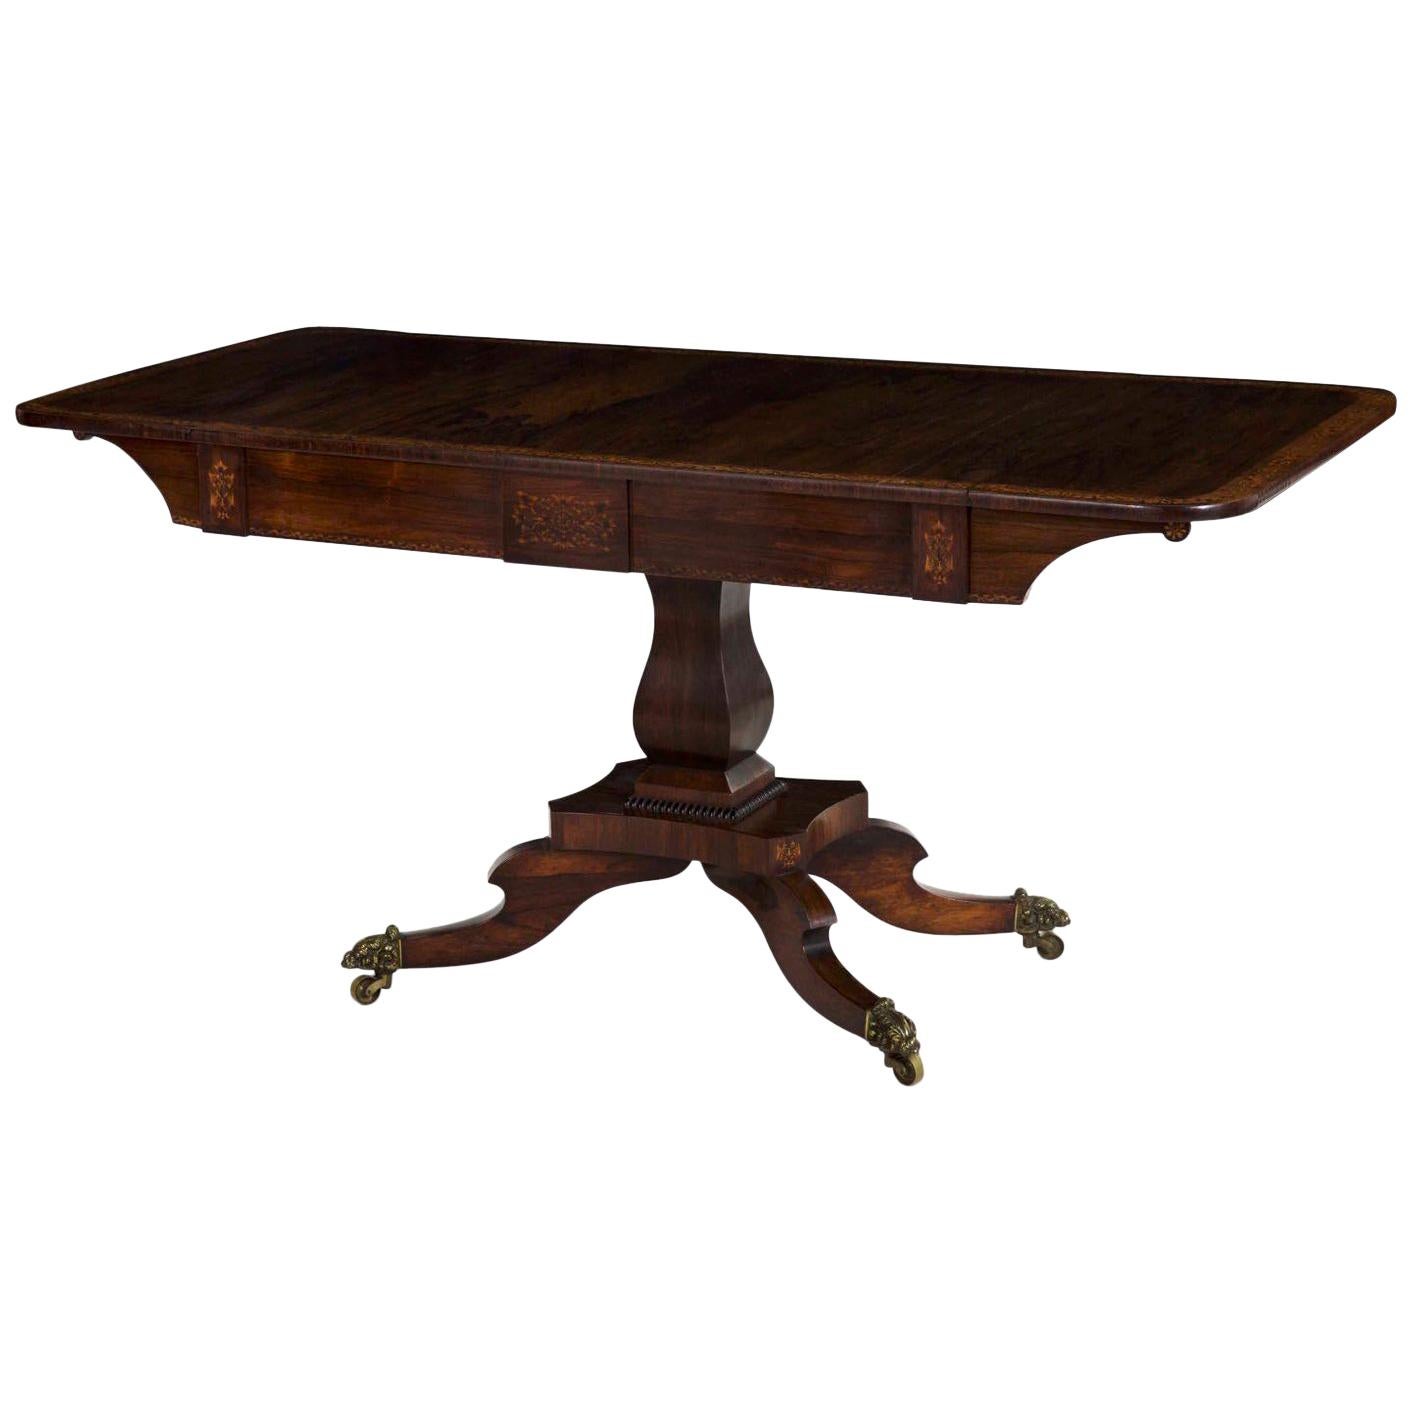 19th Century English Regency Period Inlaid Rosewood Antique Sofa Table